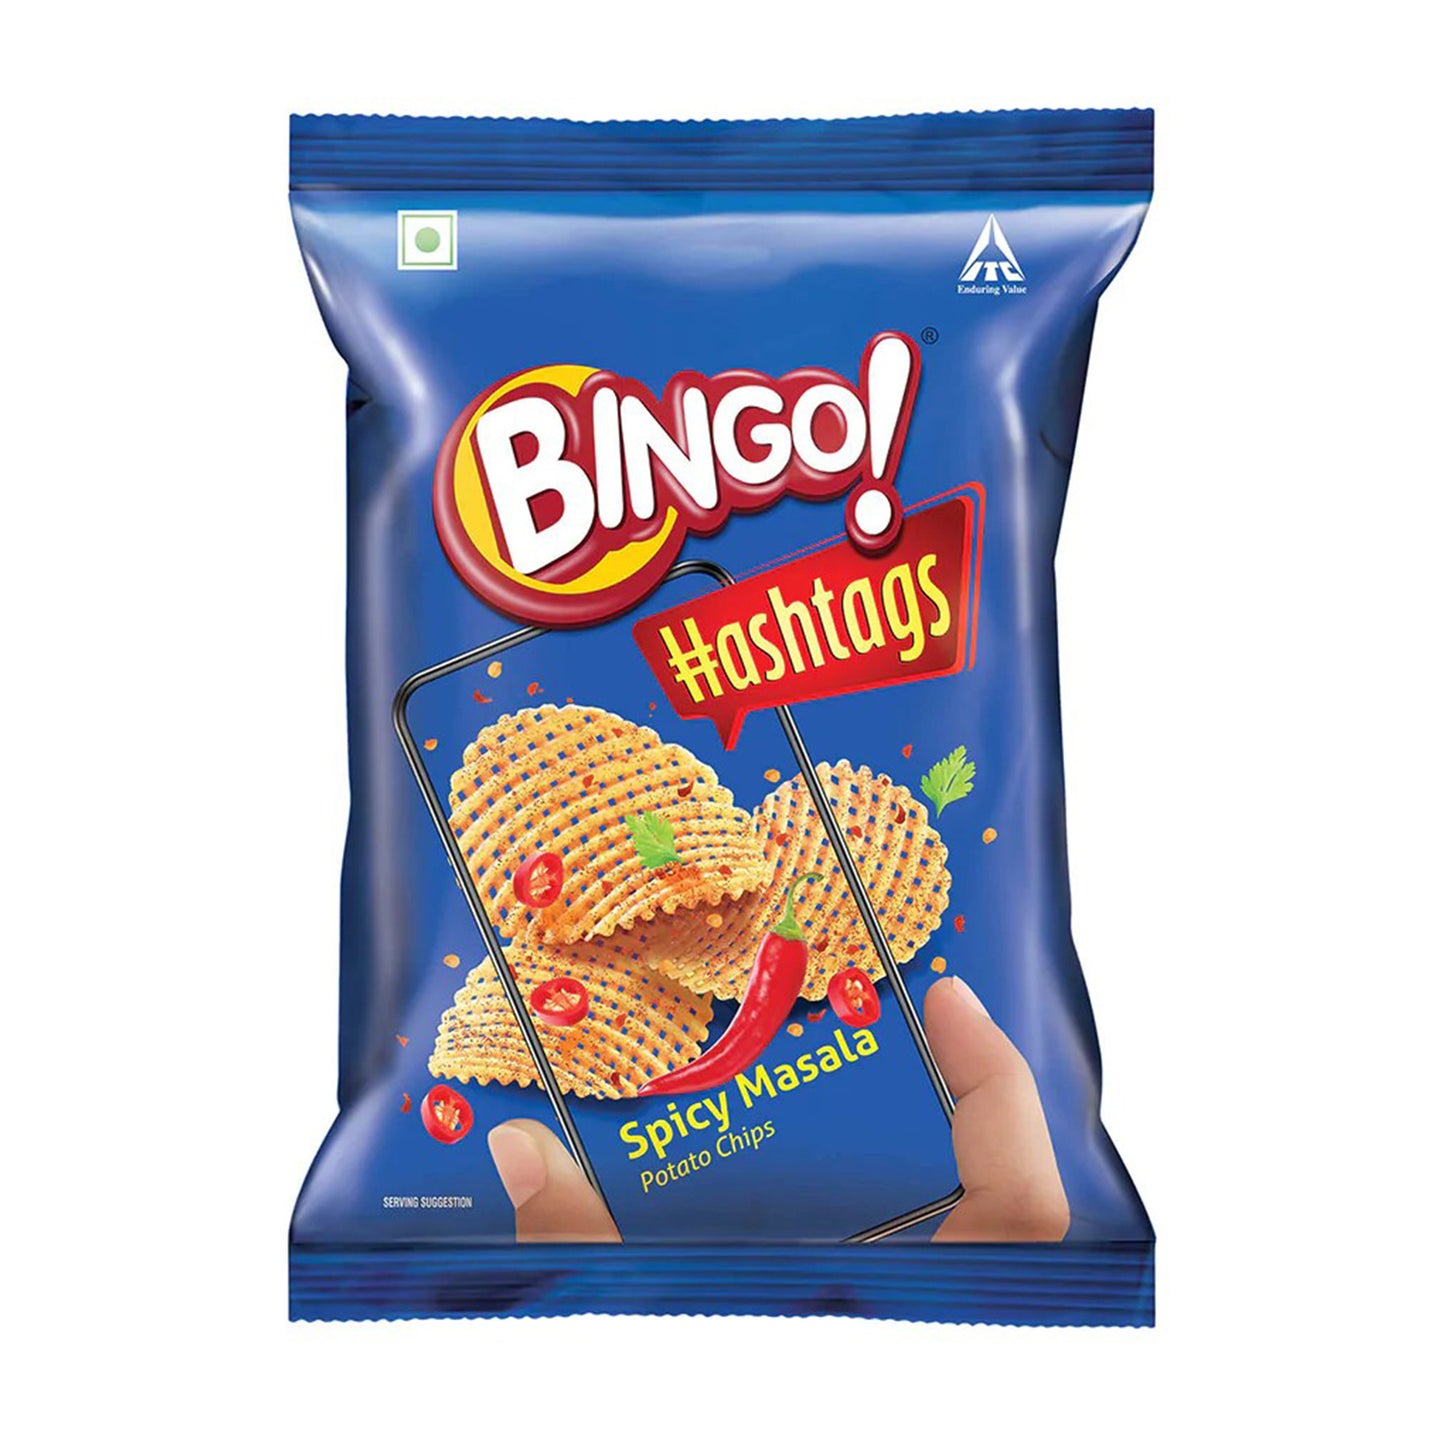 Bingo! Hashtags Spicy Masala Potato Chips (58g)